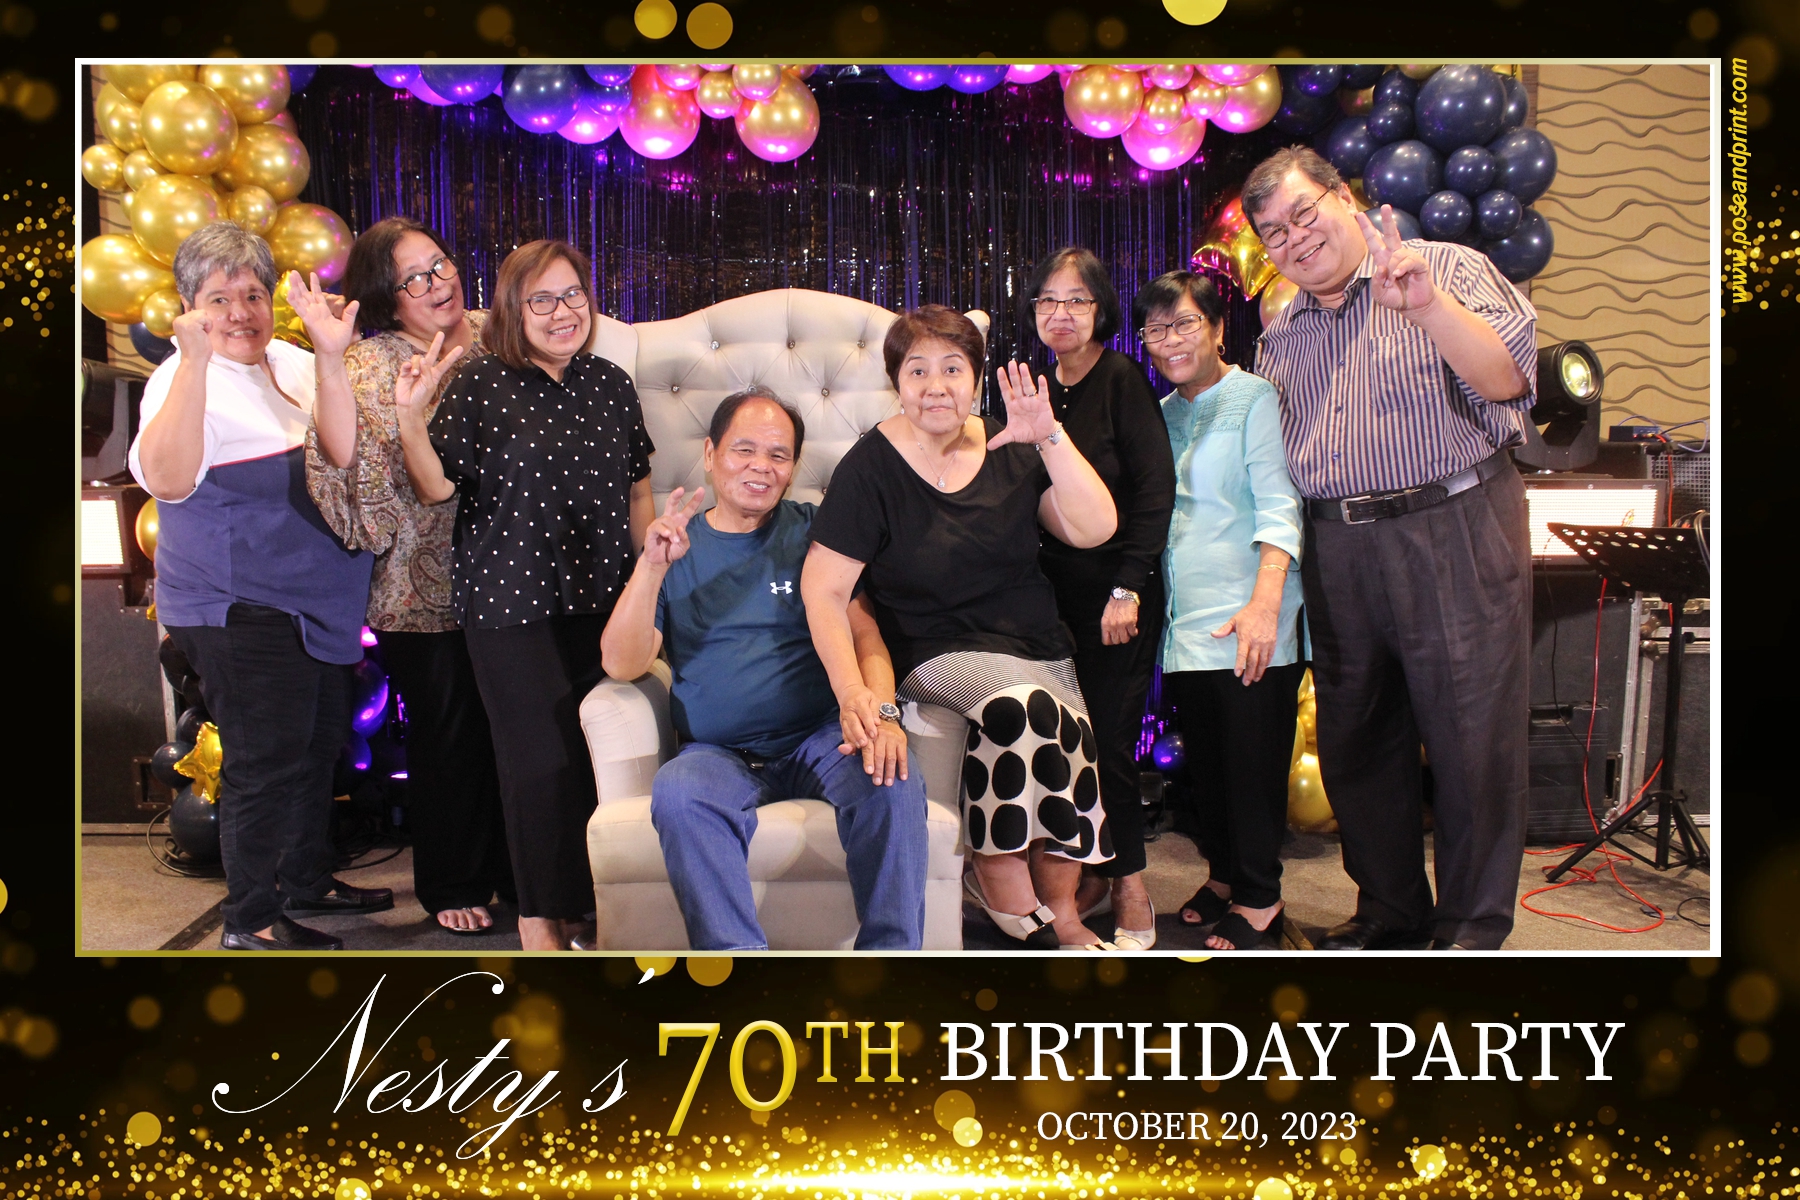 Nesty’s 70th Birthday – Photoman